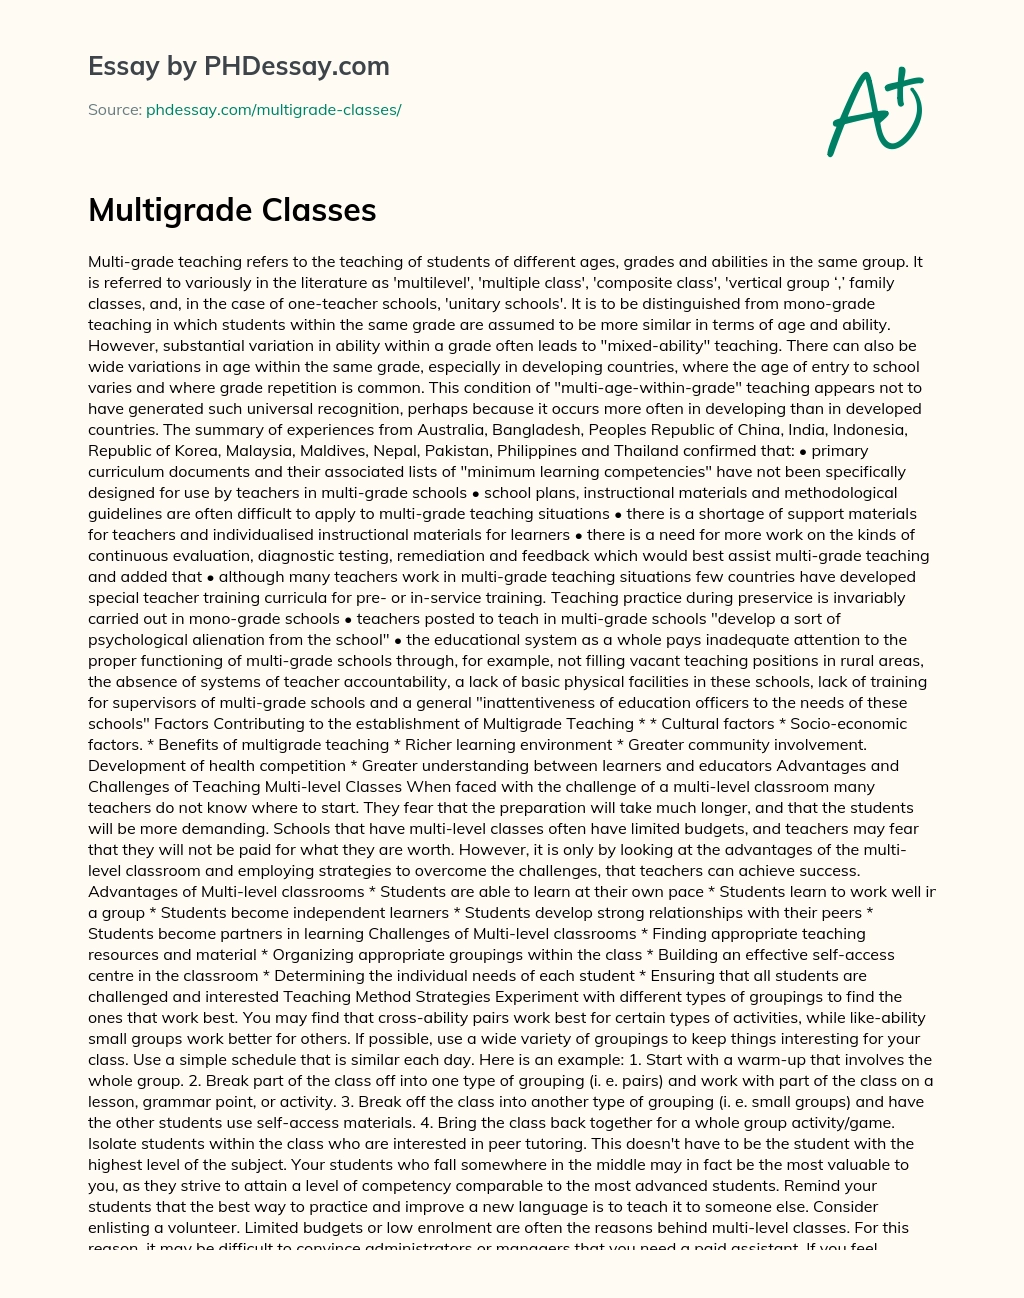 Multigrade Classes essay